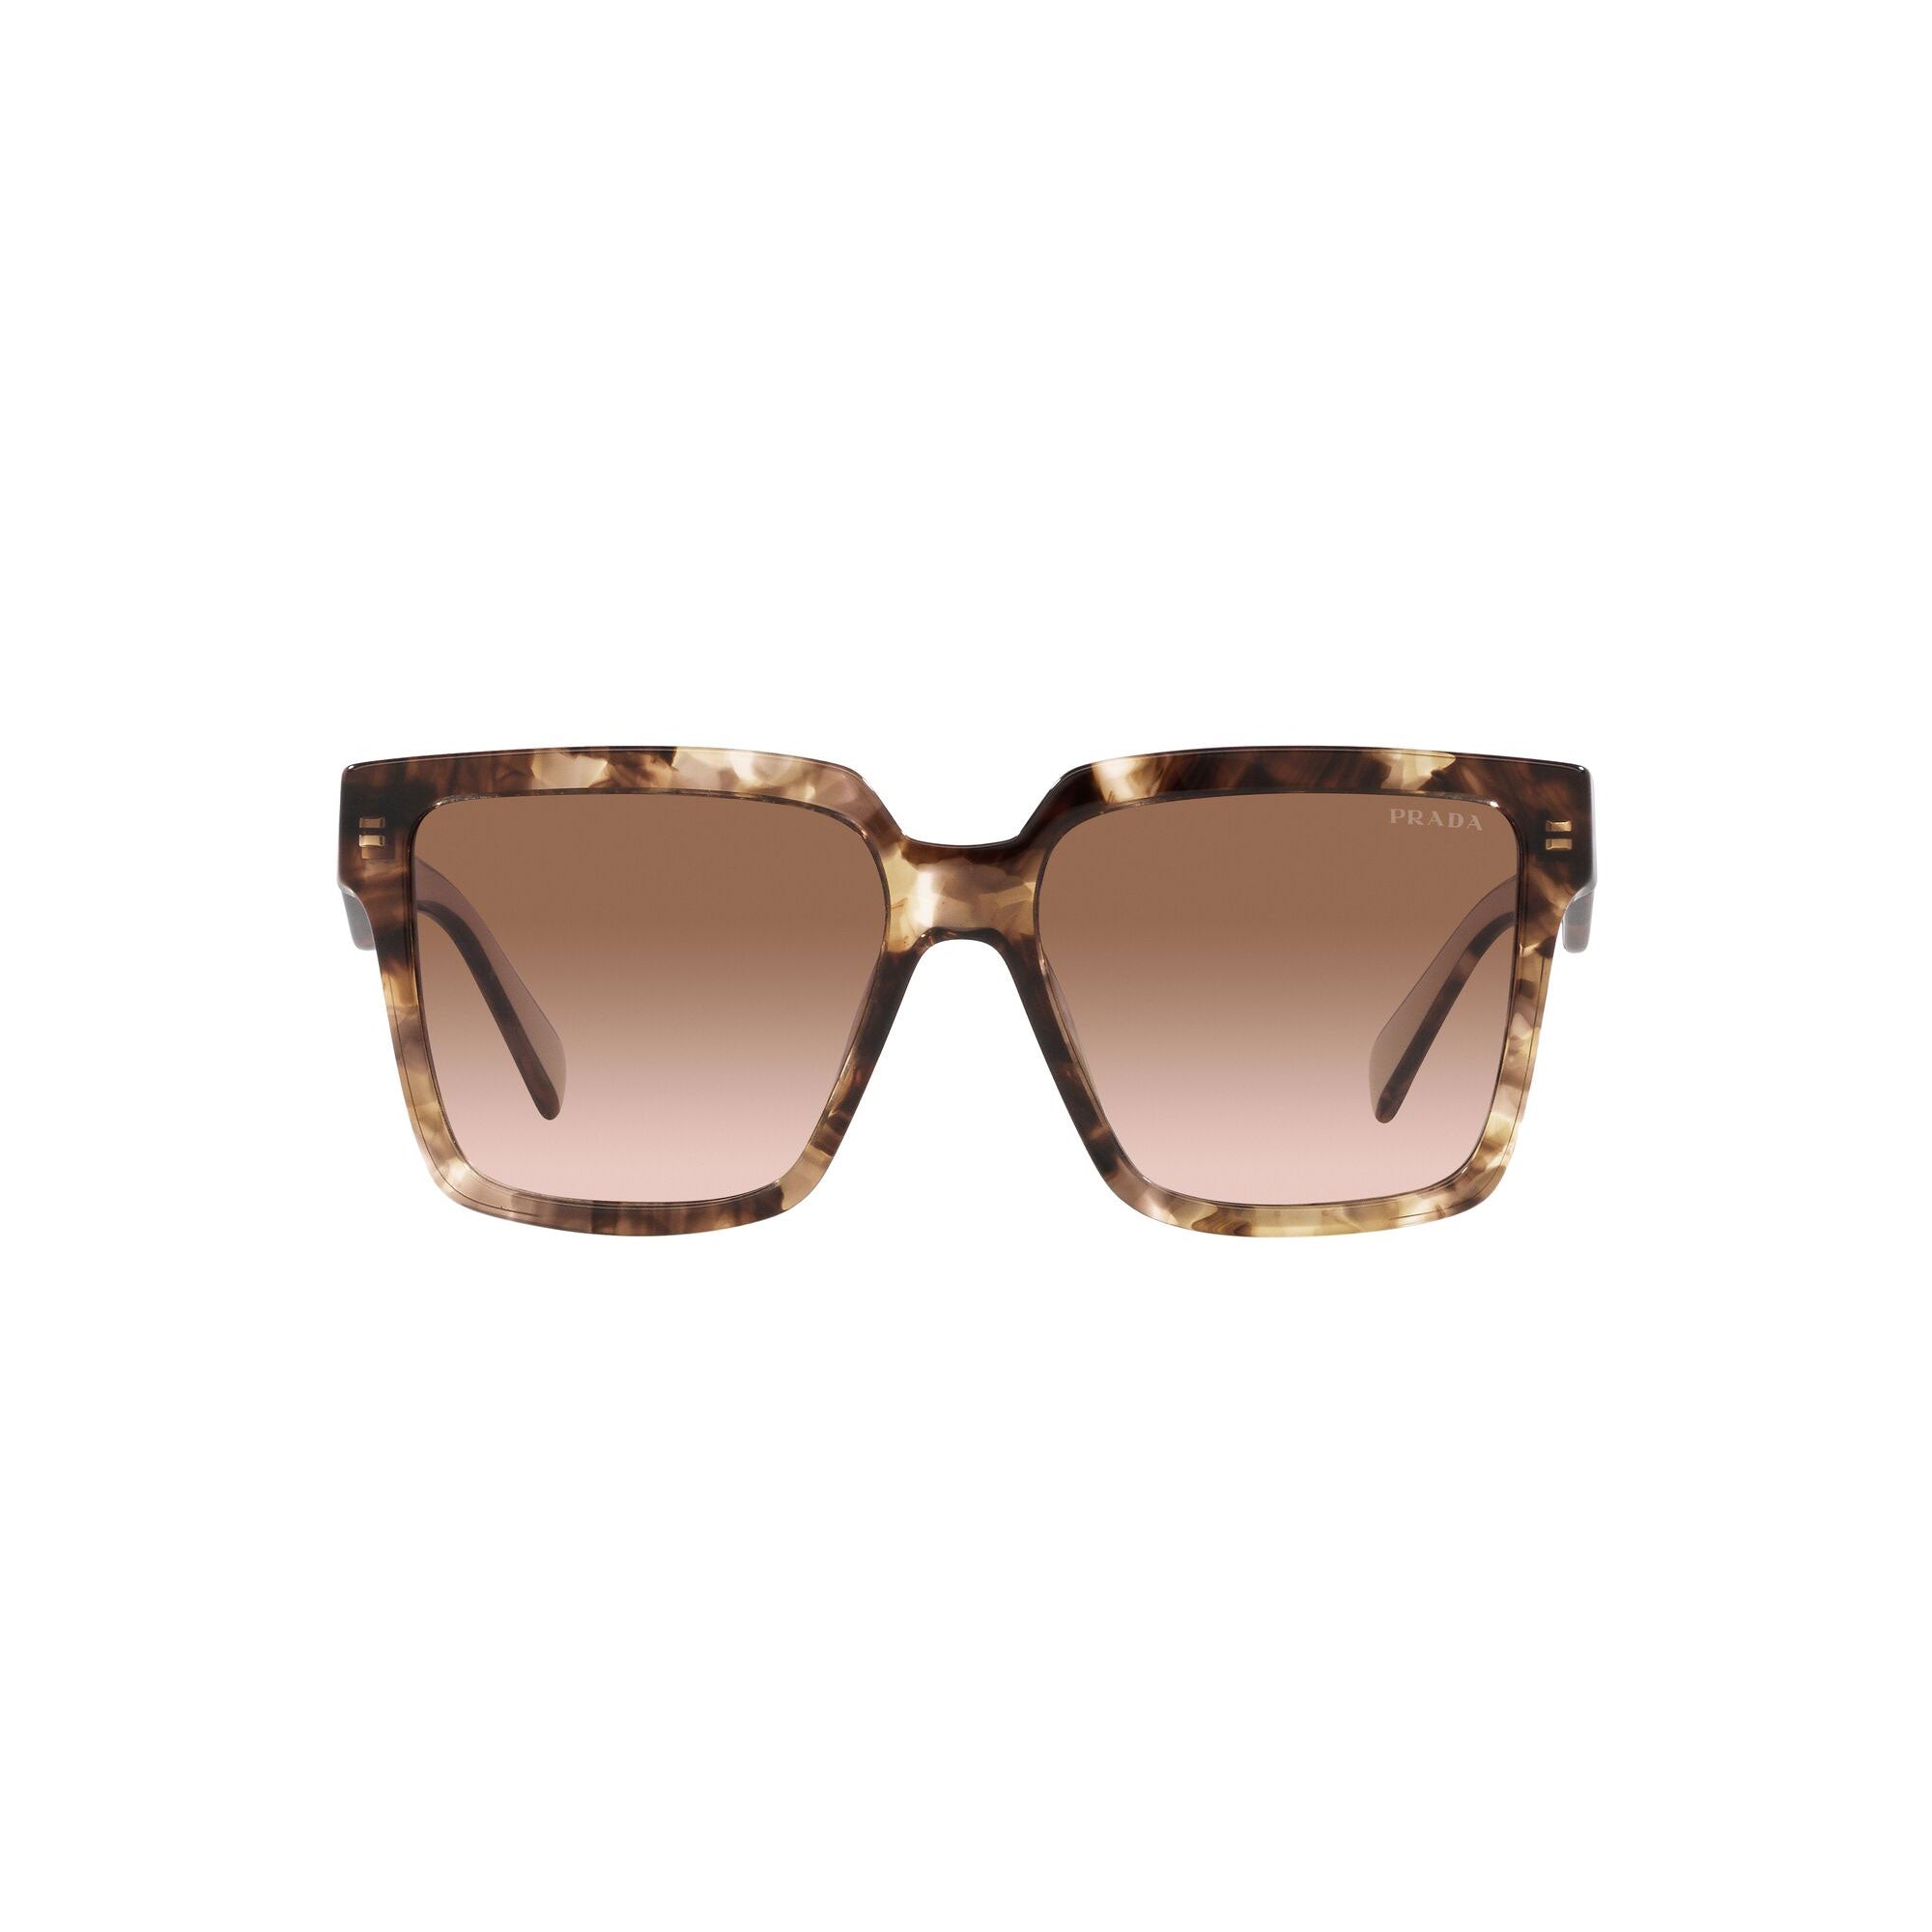 Discover 145+ bupa sunglasses latest